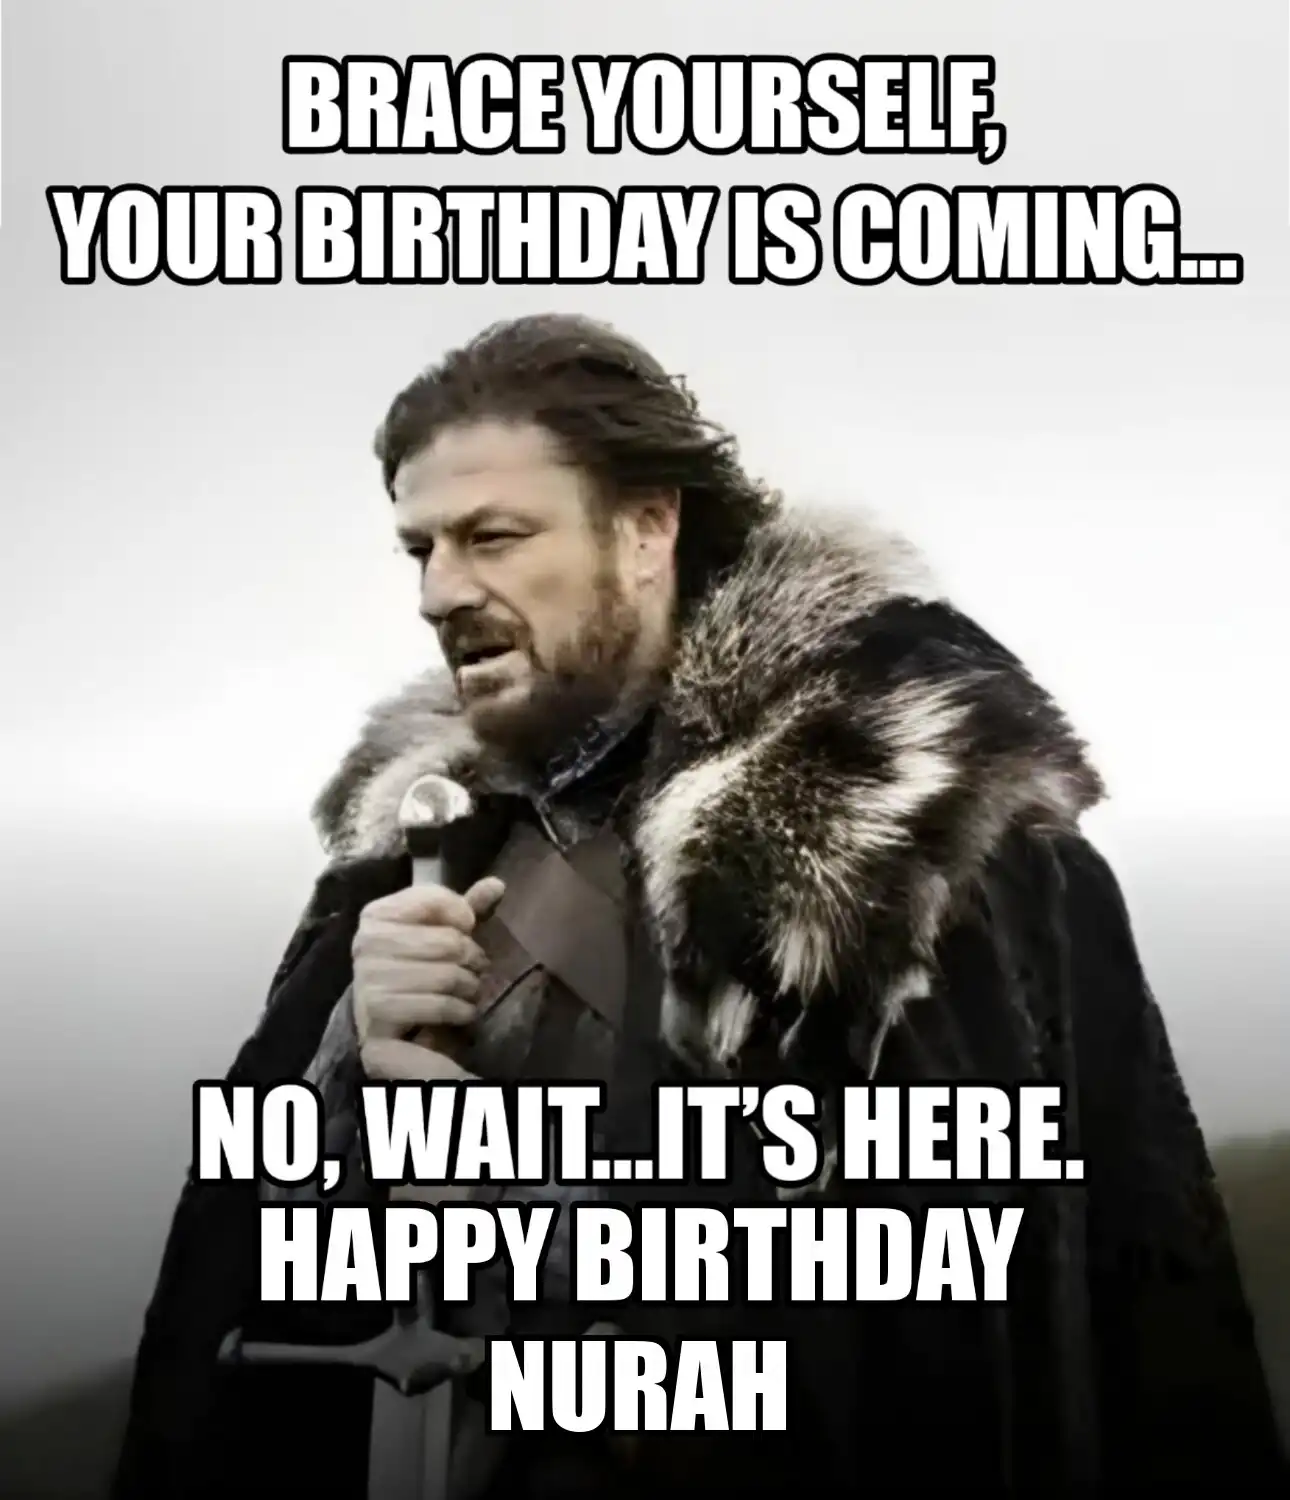 Happy Birthday Nurah Brace Yourself Your Birthday Is Coming Meme